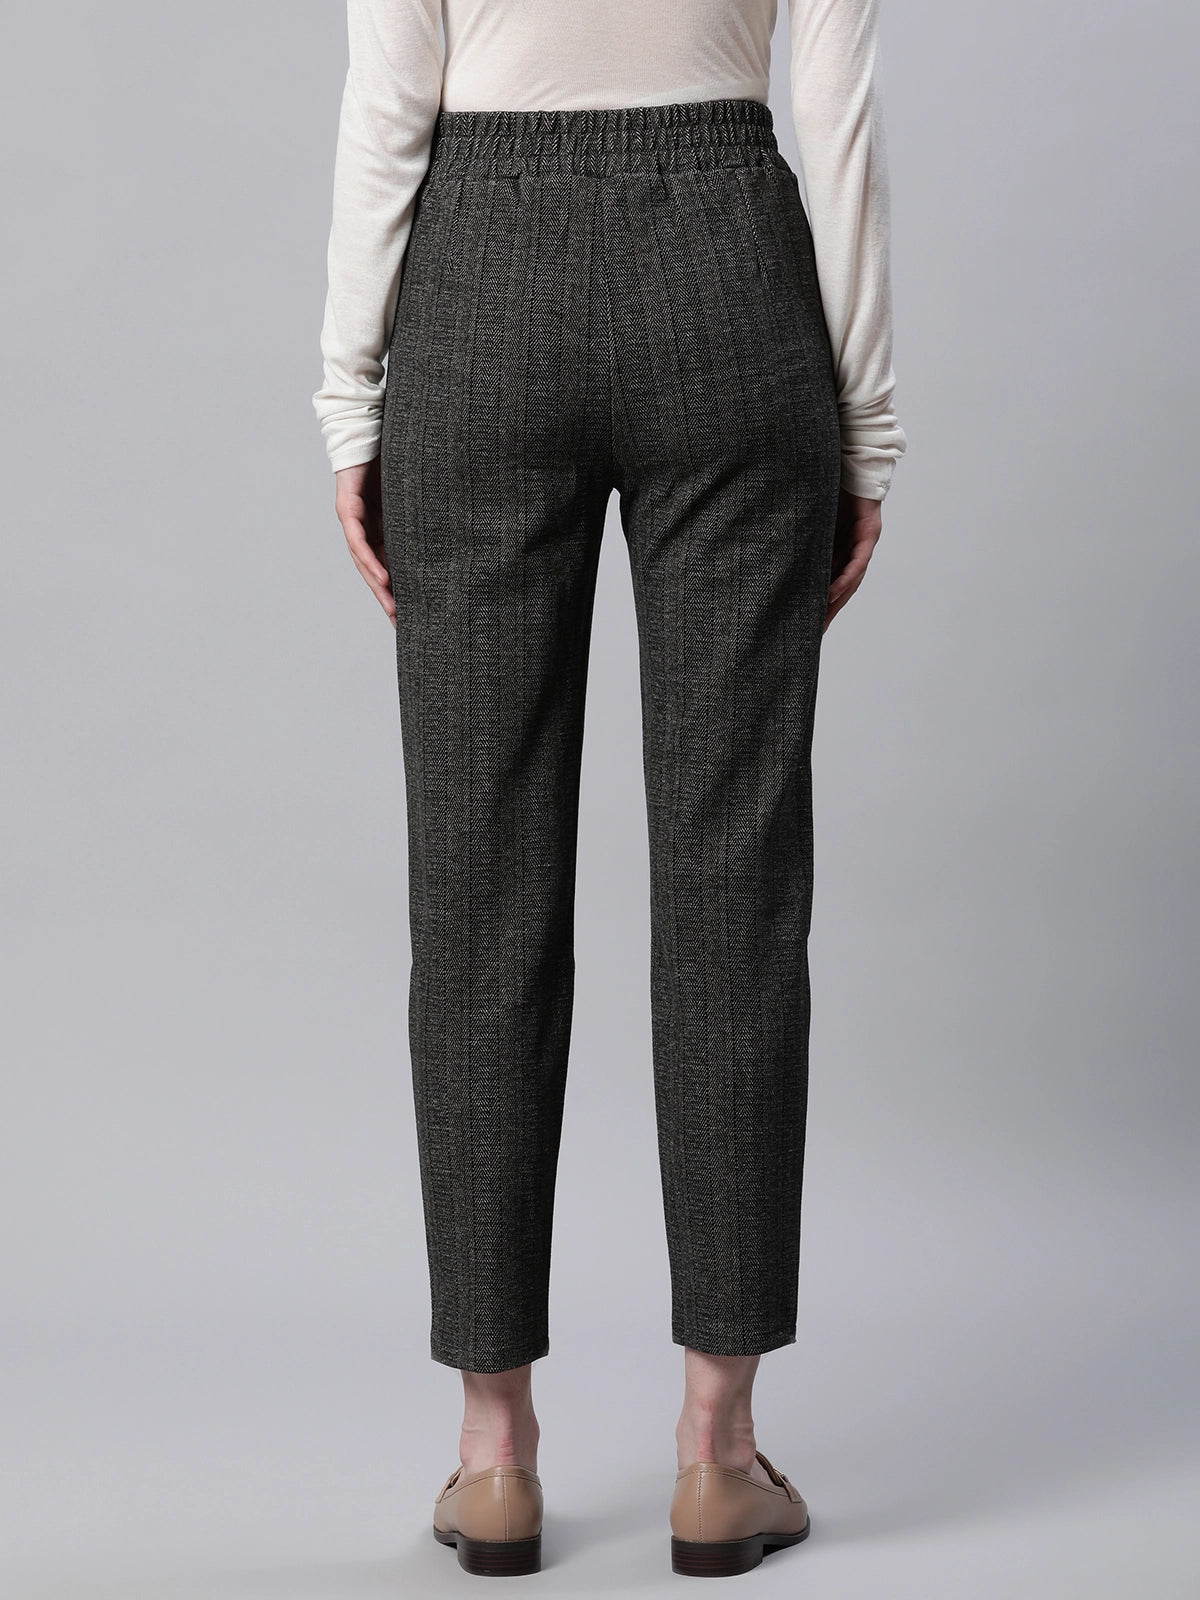 Buy Formal Trousers Pants for Women Online - Global Republic